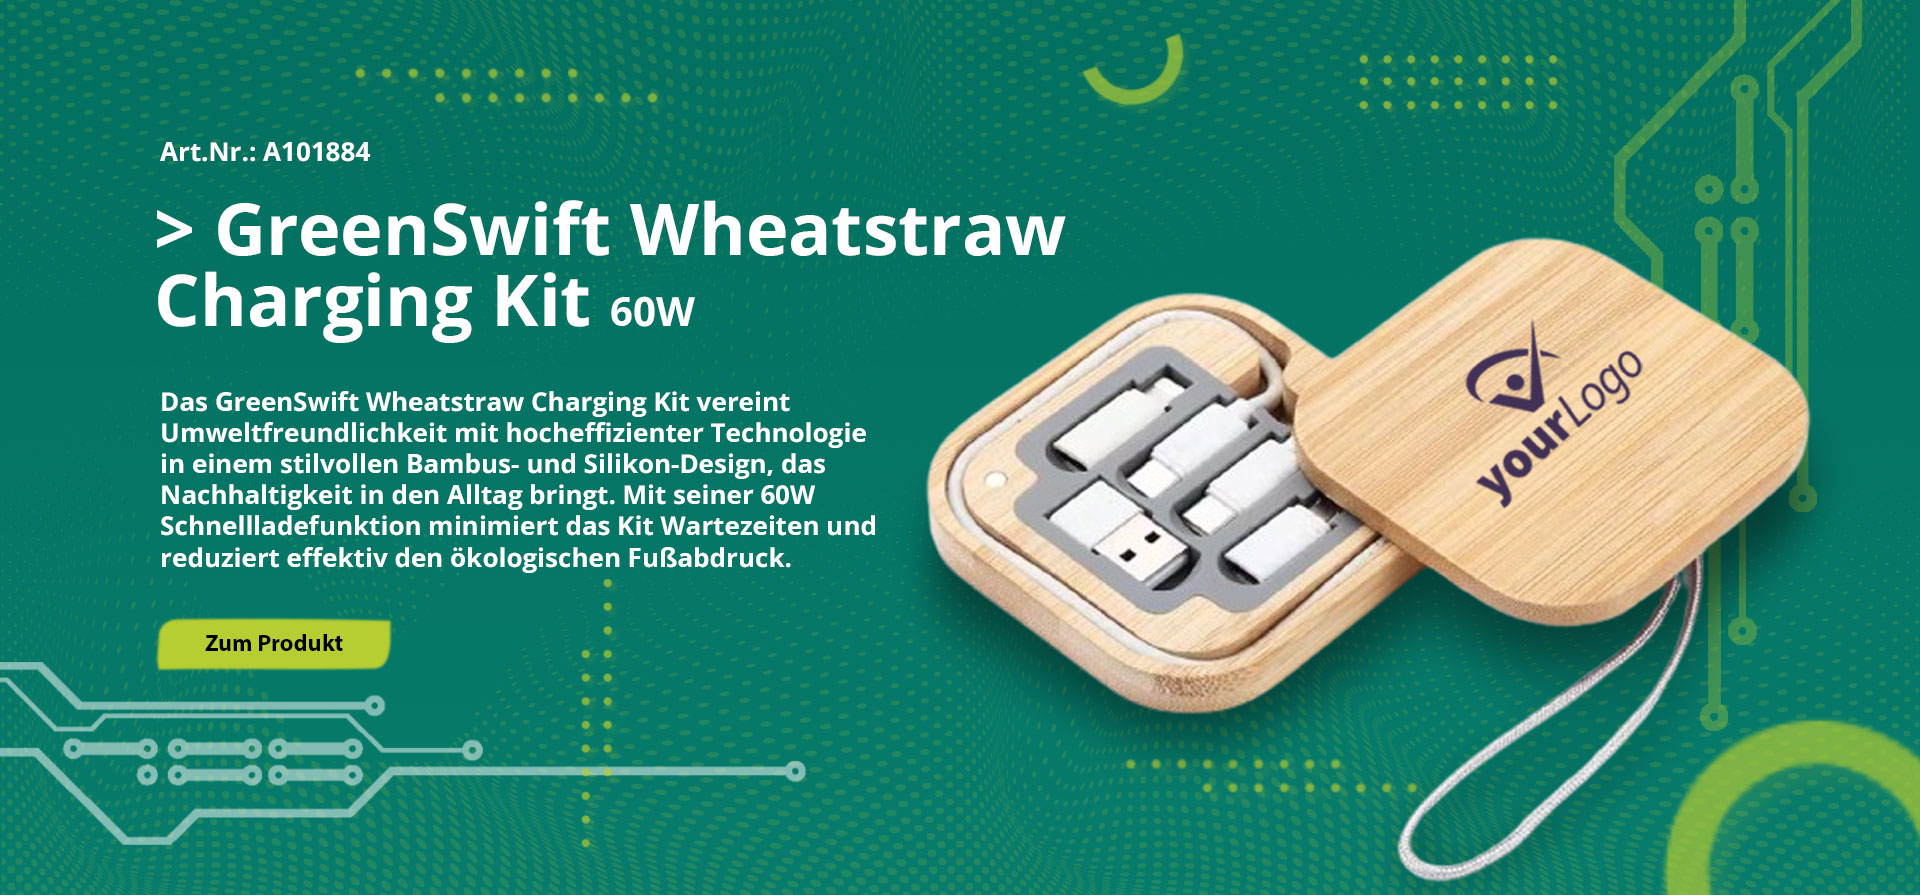 GreenSwift Wheatstraw Charging Kit